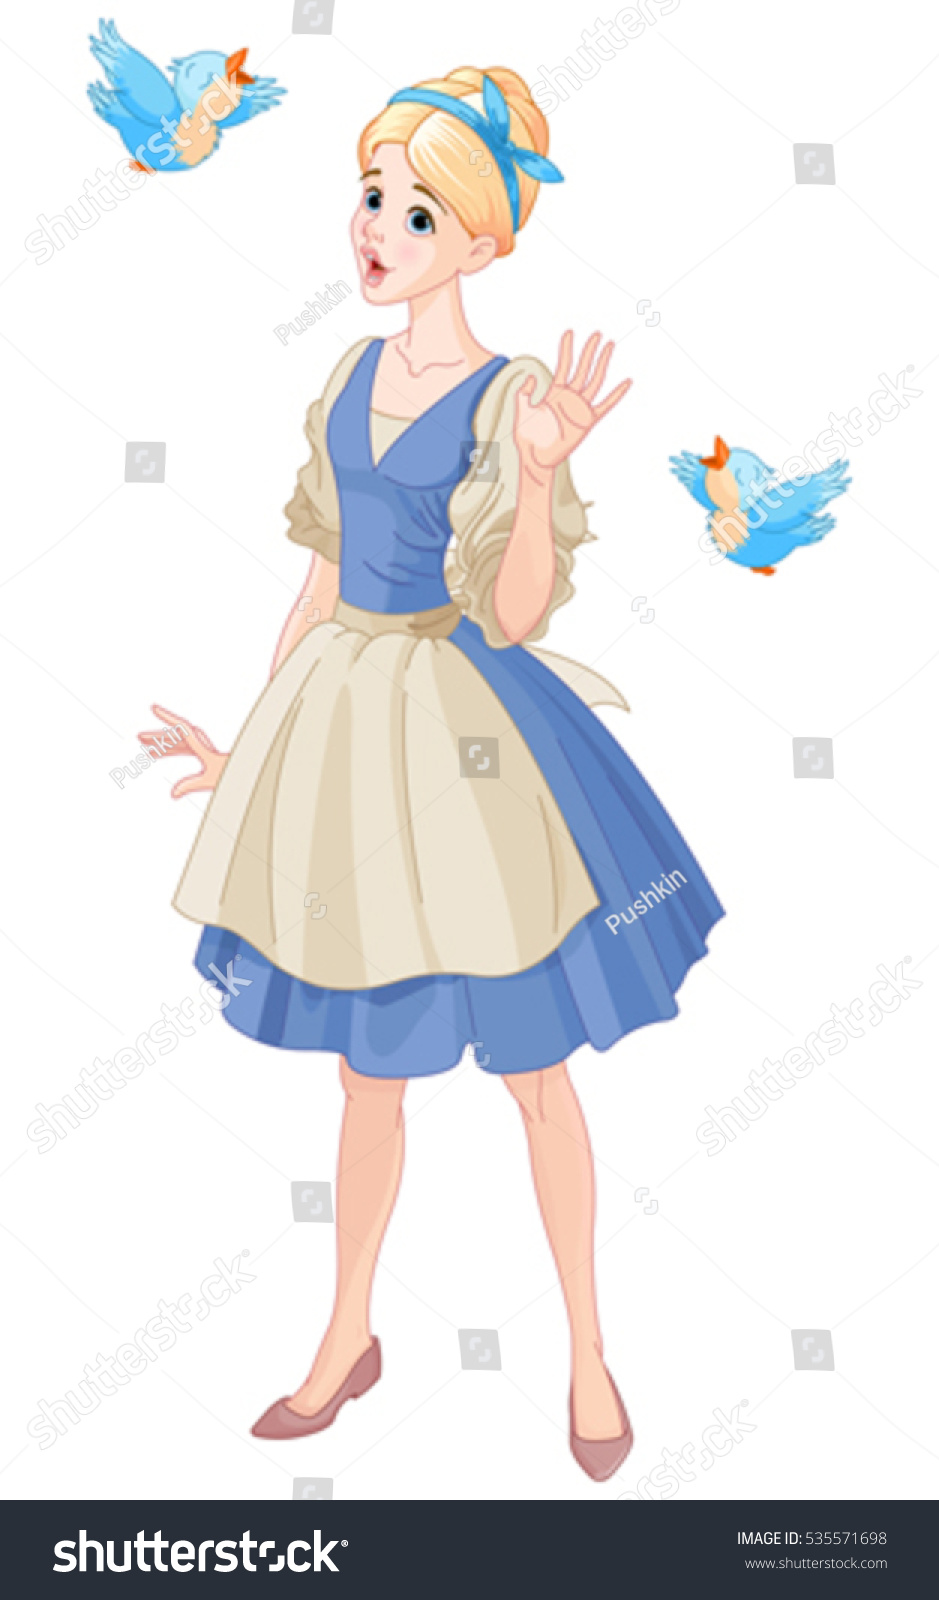 SVG of Illustration of Cinderella singing with birds svg